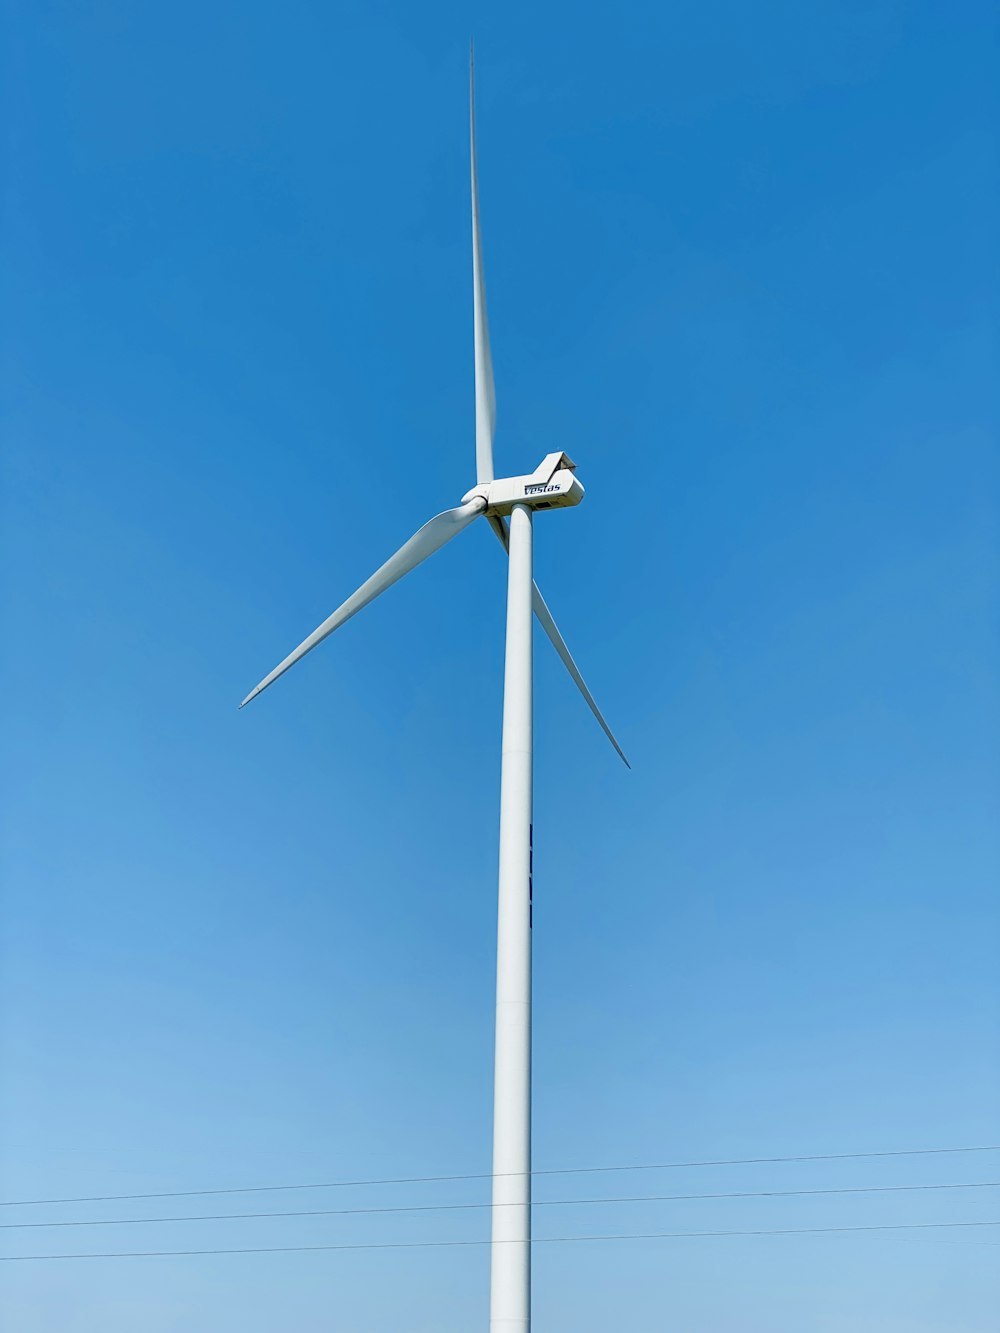 white wind turbine under blue sky during daytime